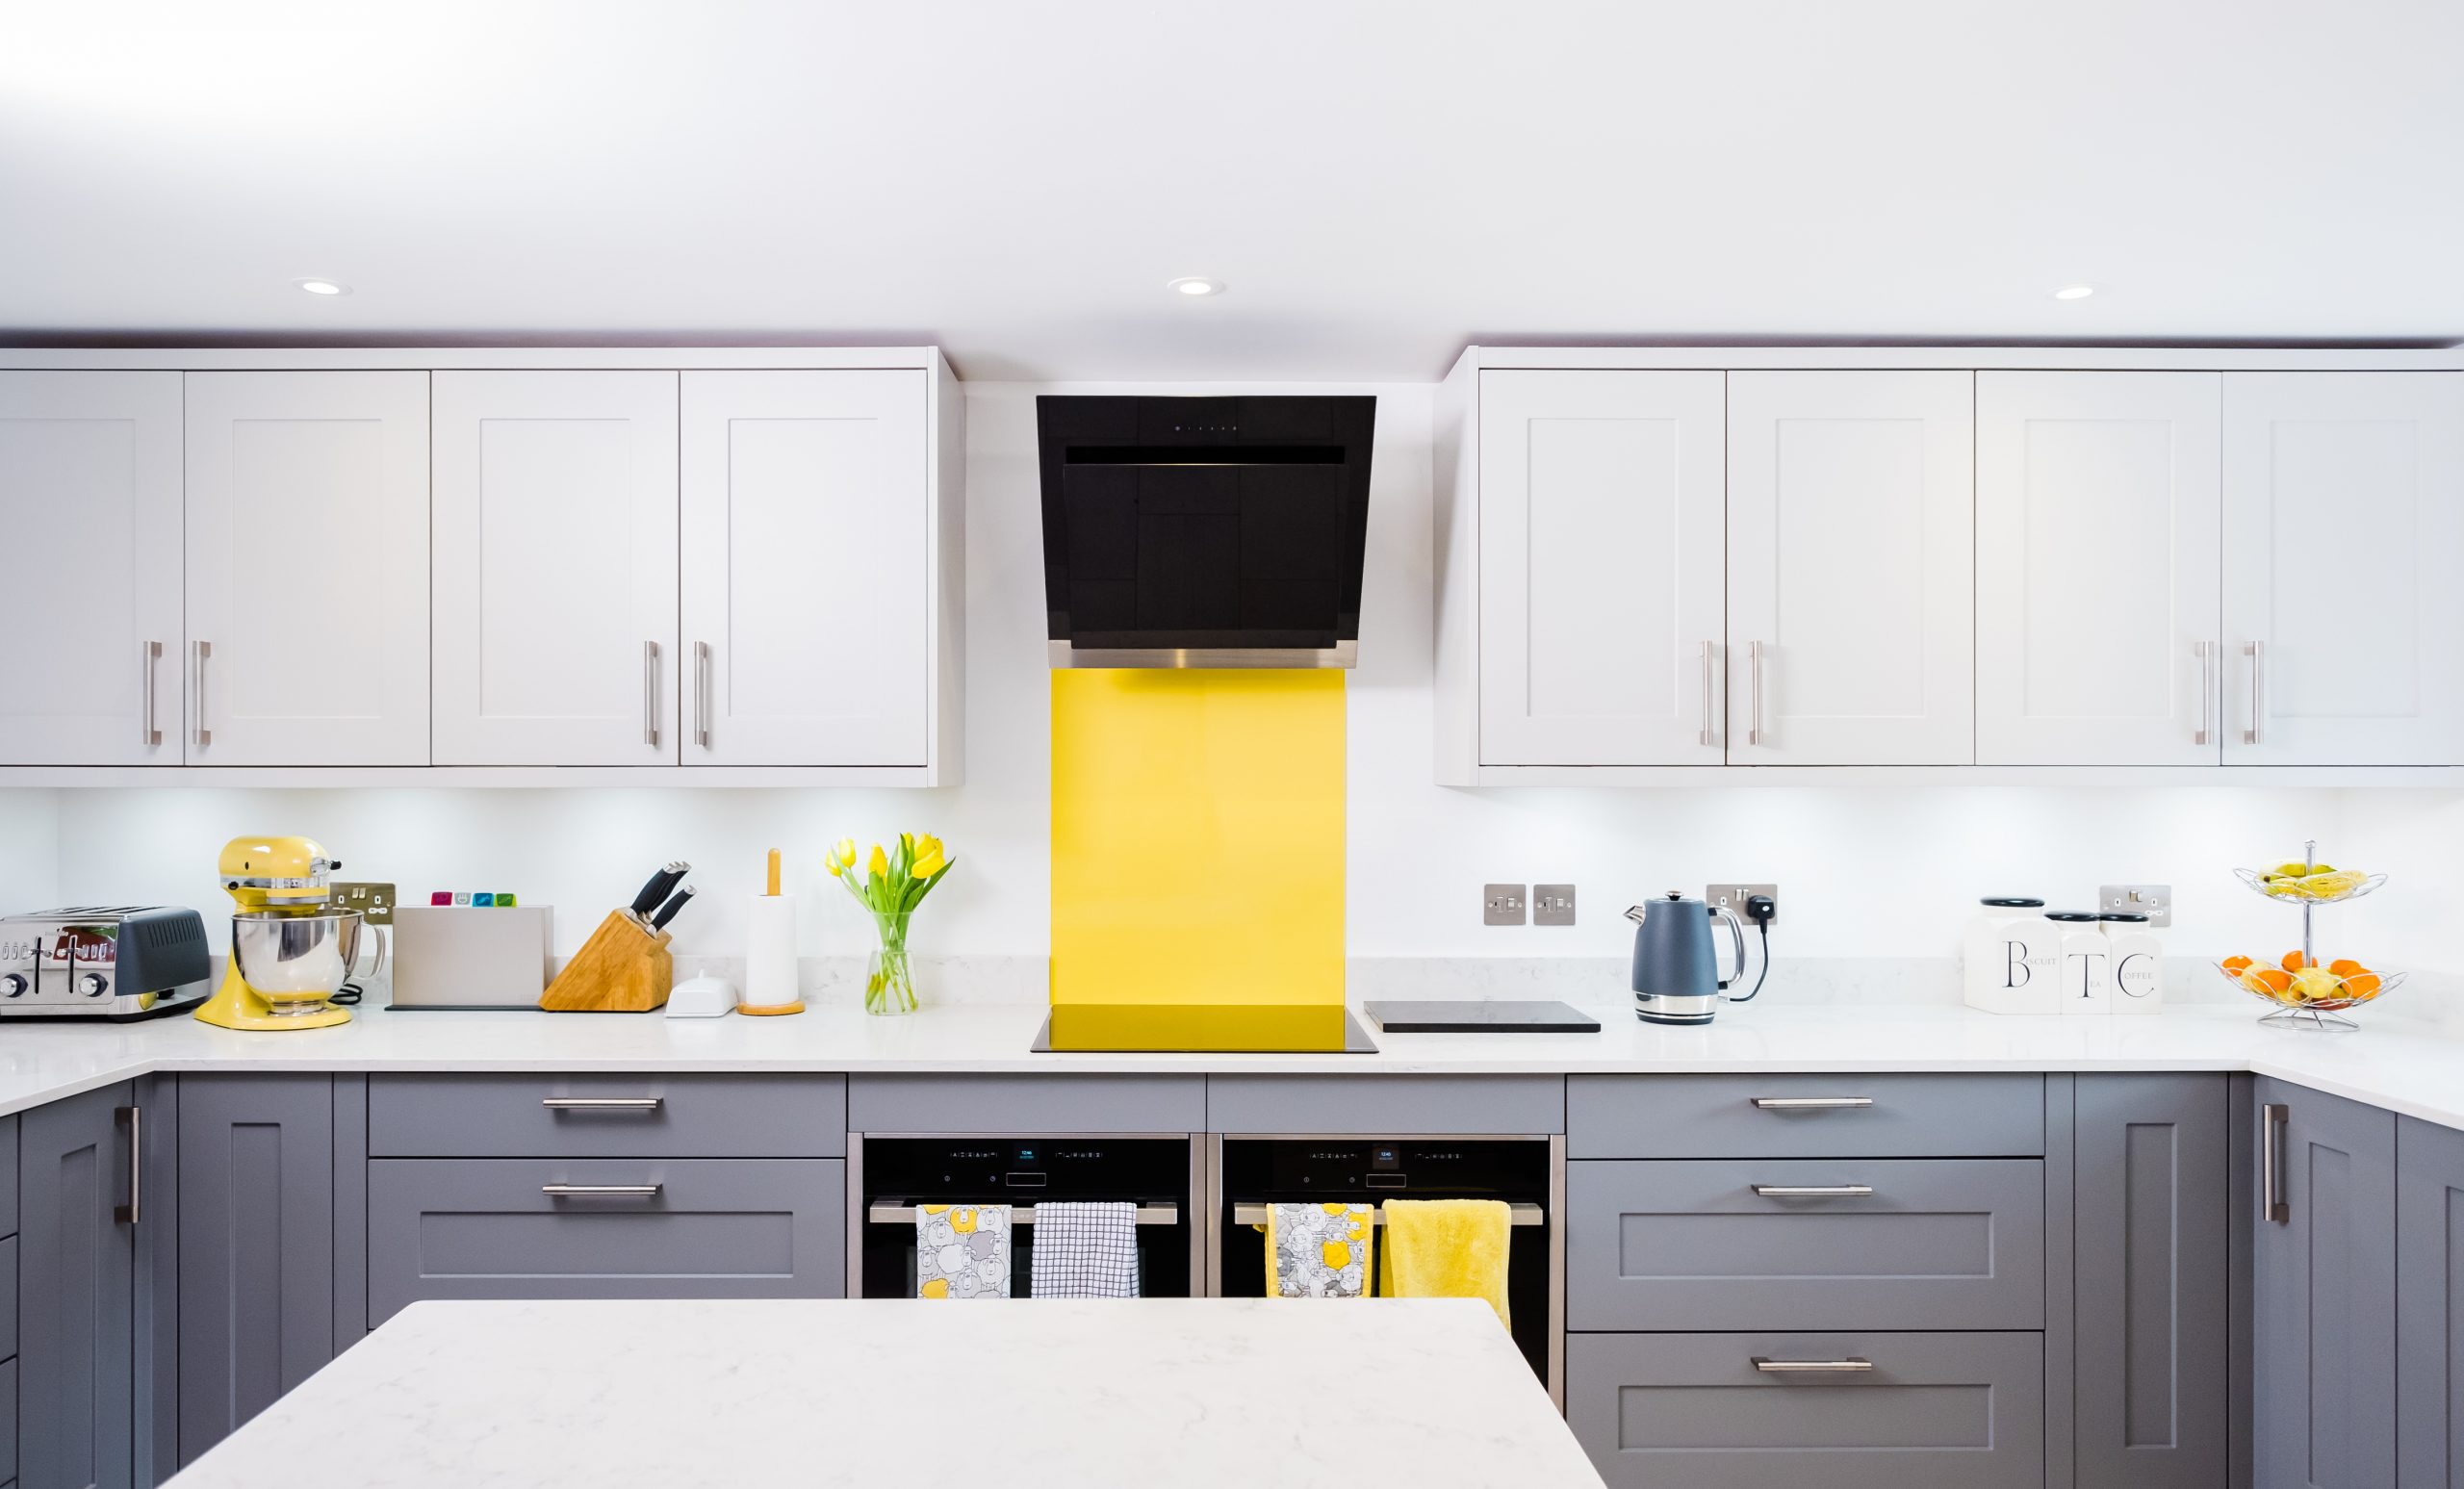 A grey kitchen with yellow splashback